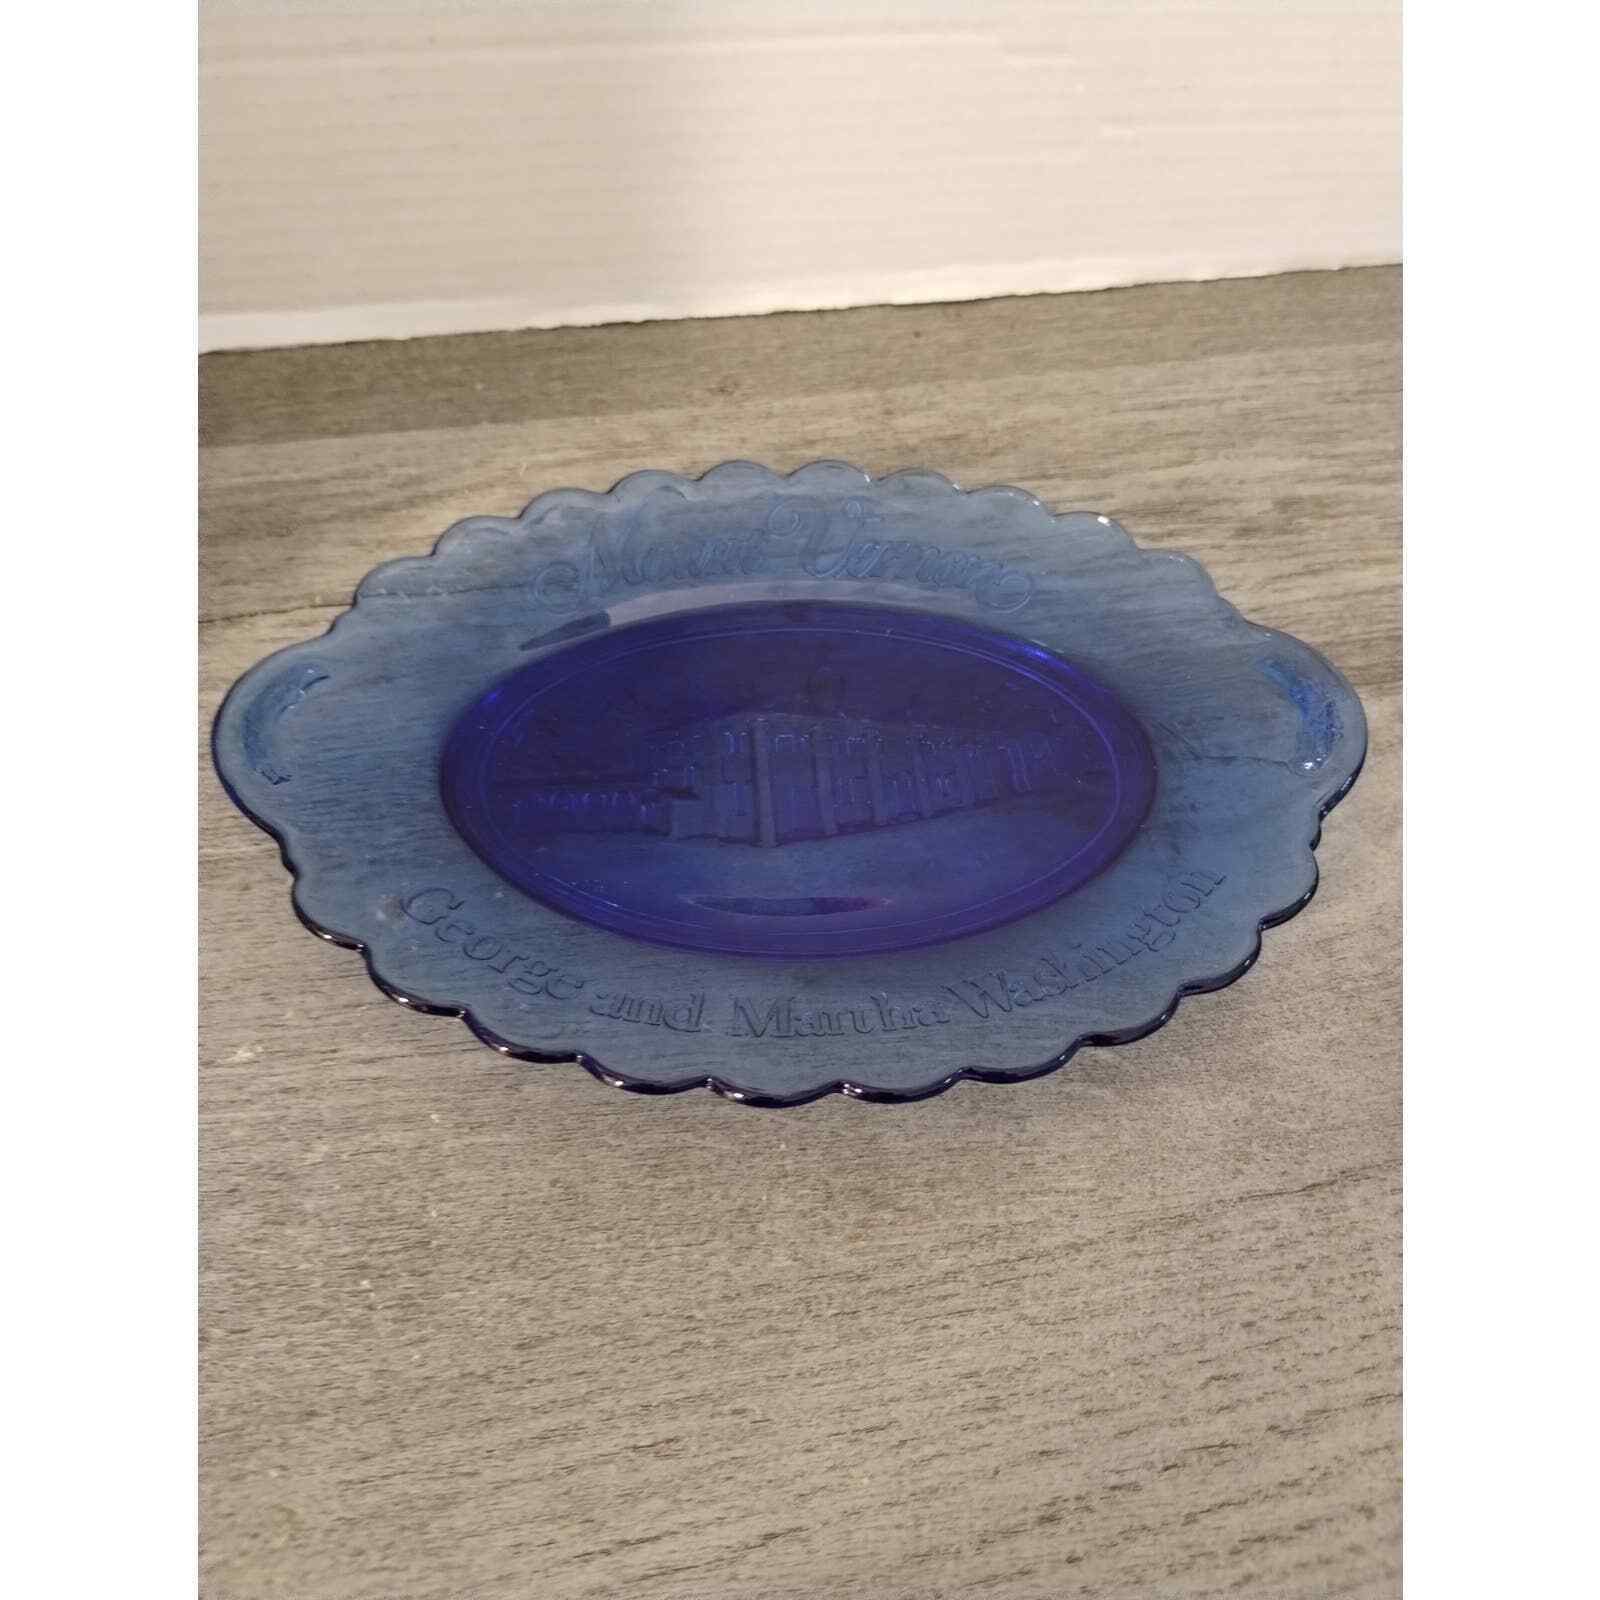 Avon Mount Vernon George Washington Fostoria Blue Trinket Soap Dish Plate Glass